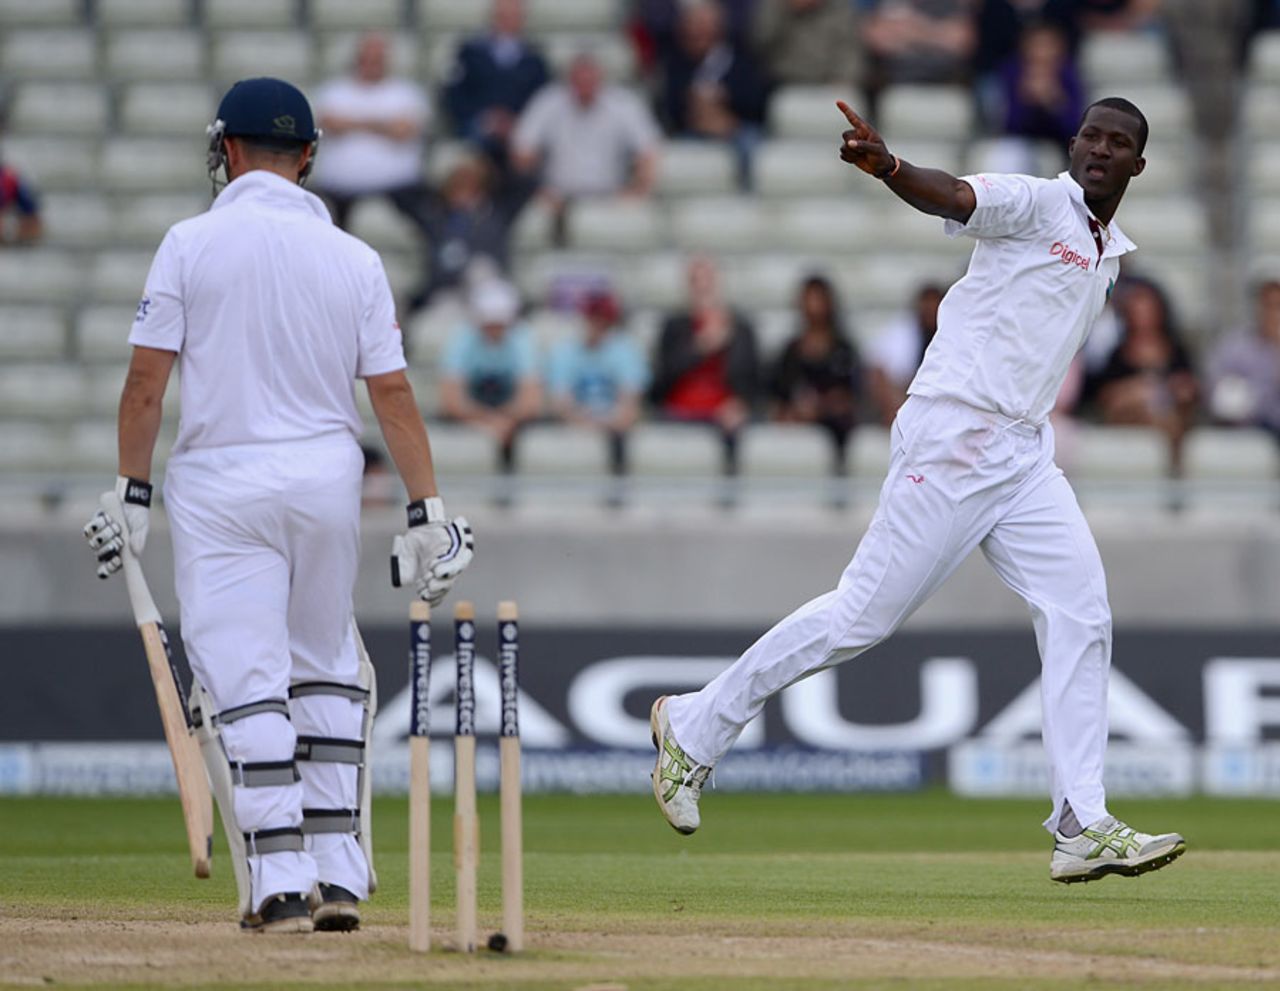 Jonathan Trott chopped on against Darren Sammy, England v West Indies, 3rd Test, Edgbaston, 4th day, June 10, 2012